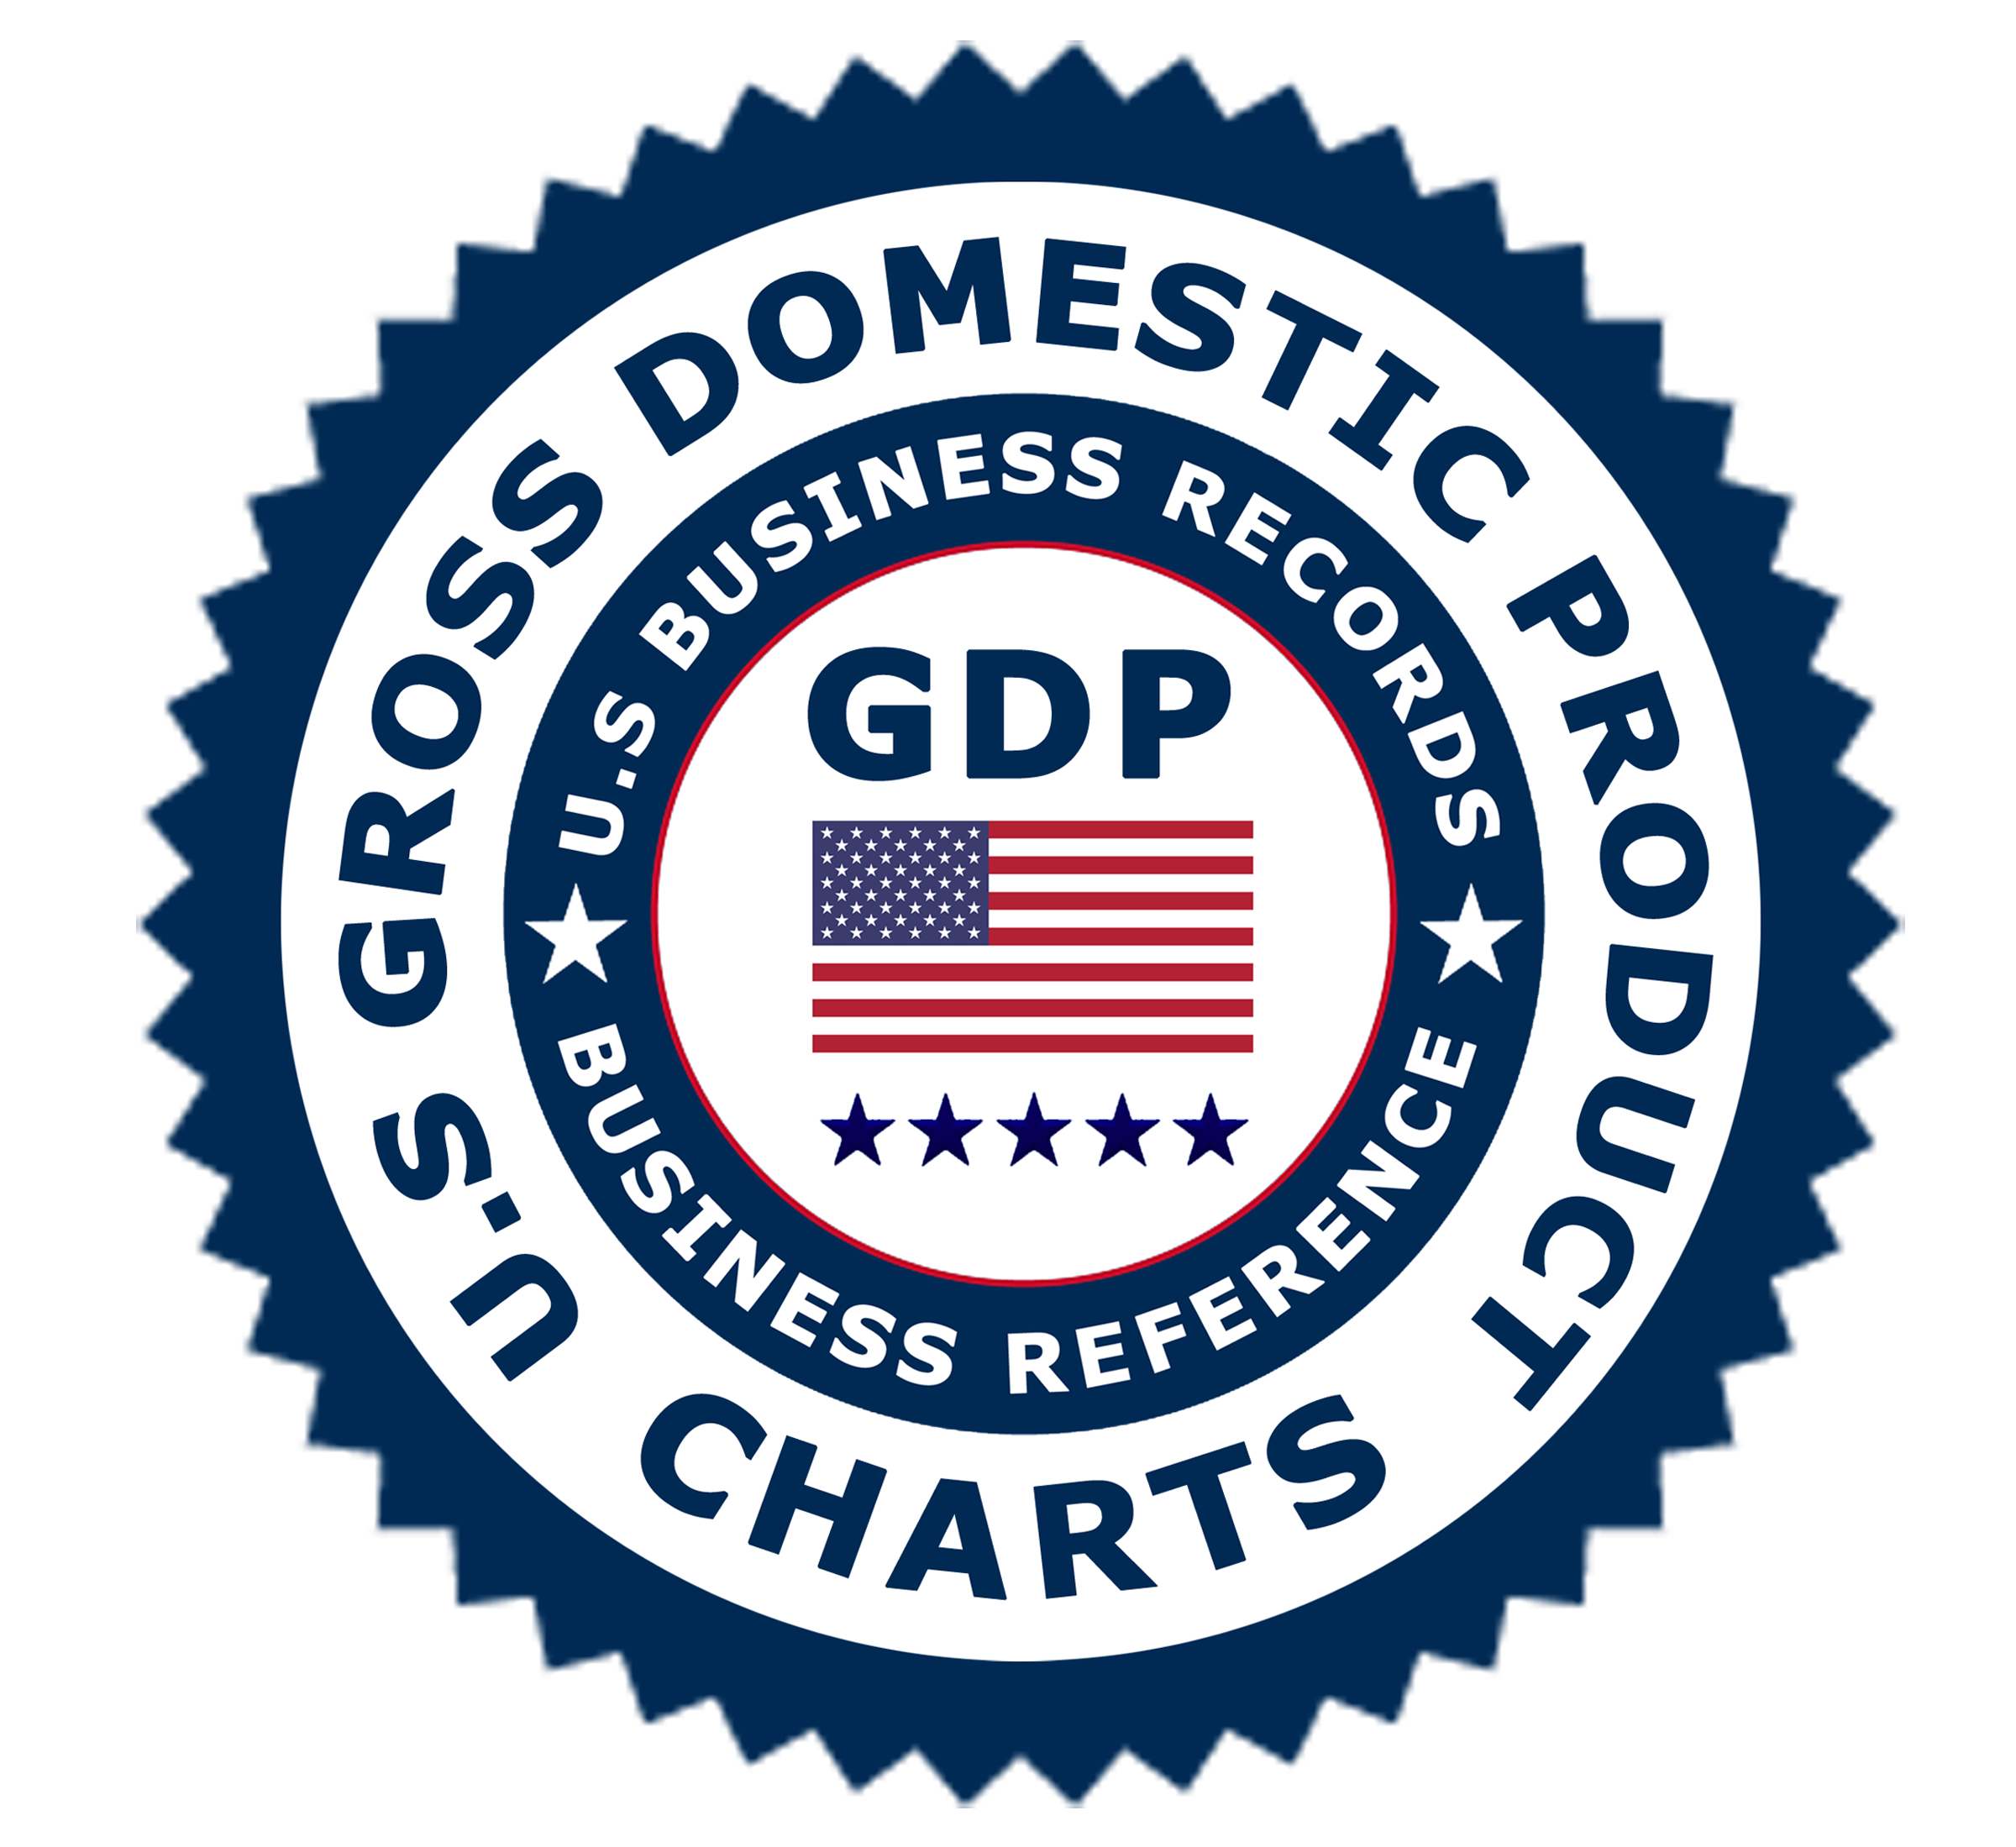 Company GDP Label 2